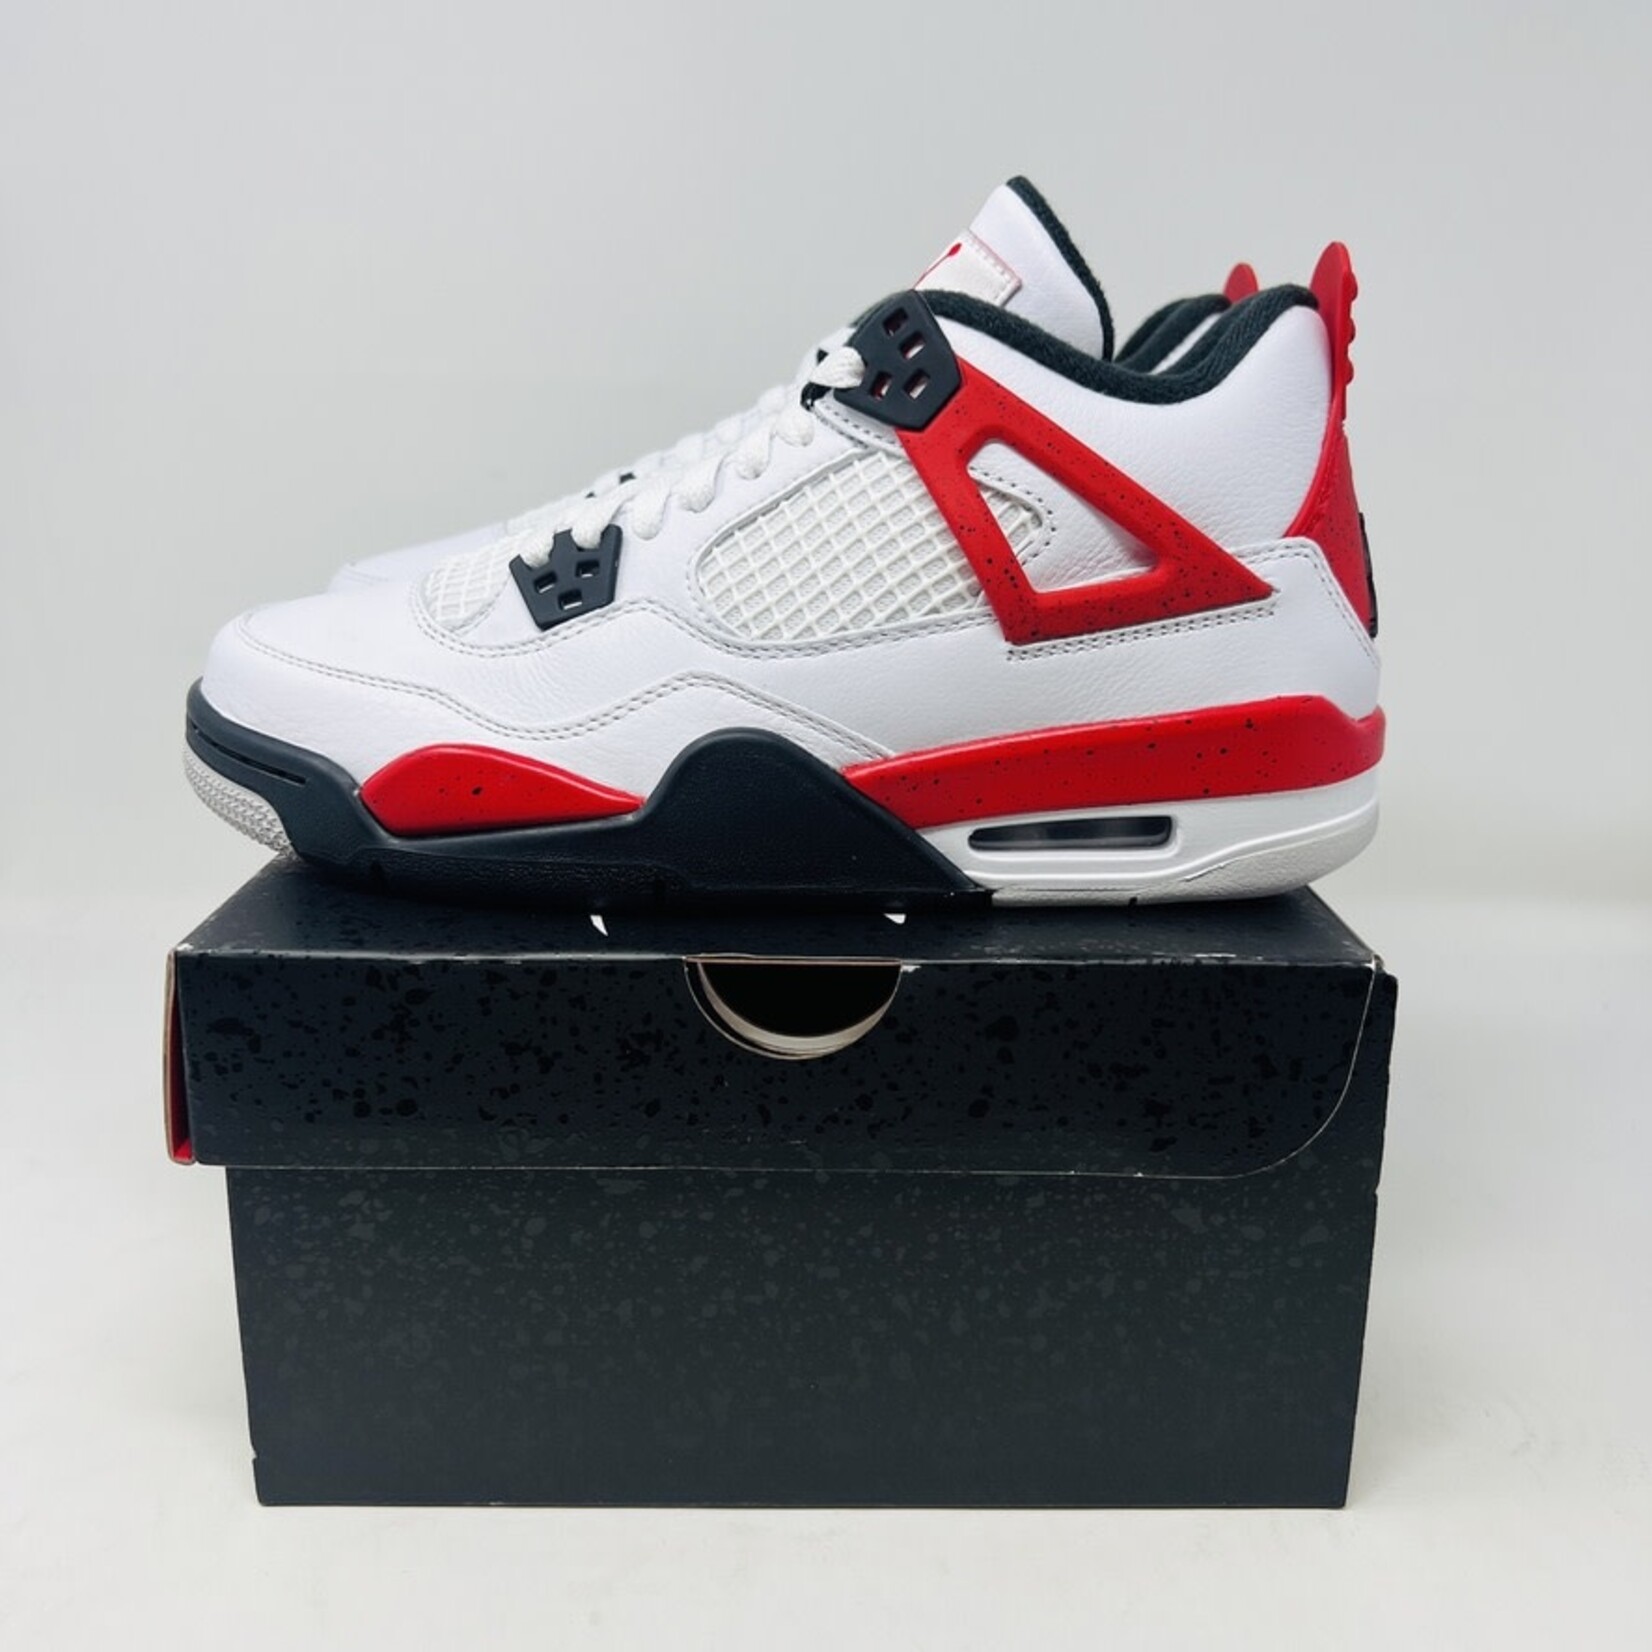 Jordan Jordan 4 Retro Red Cement (GS)